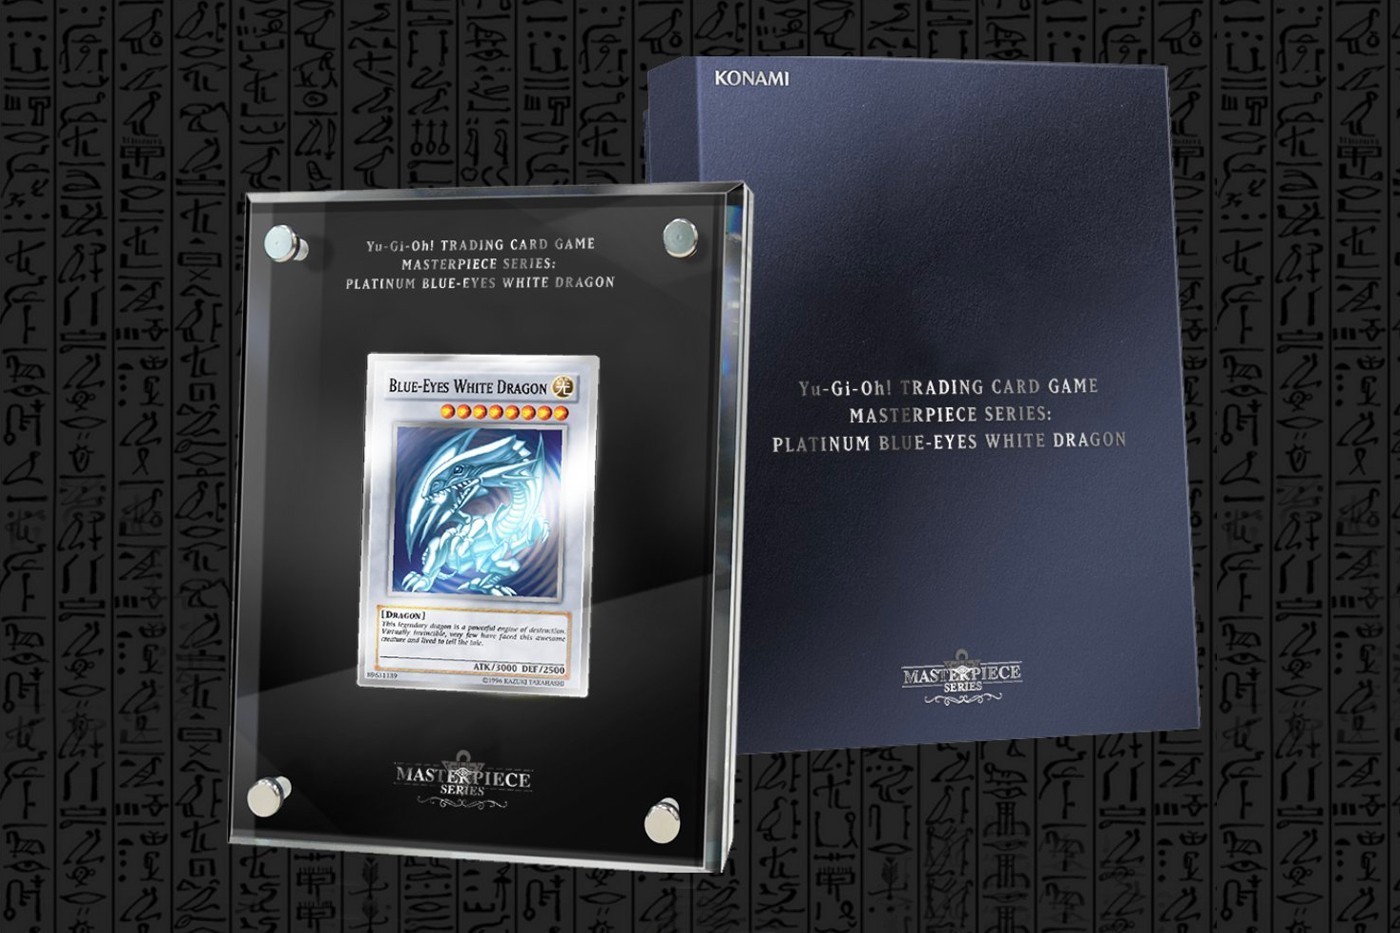 《游戏王 Yu-Gi-Oh!》官方推出要价 $1,000 美元收藏级「青眼の白龍」卡牌